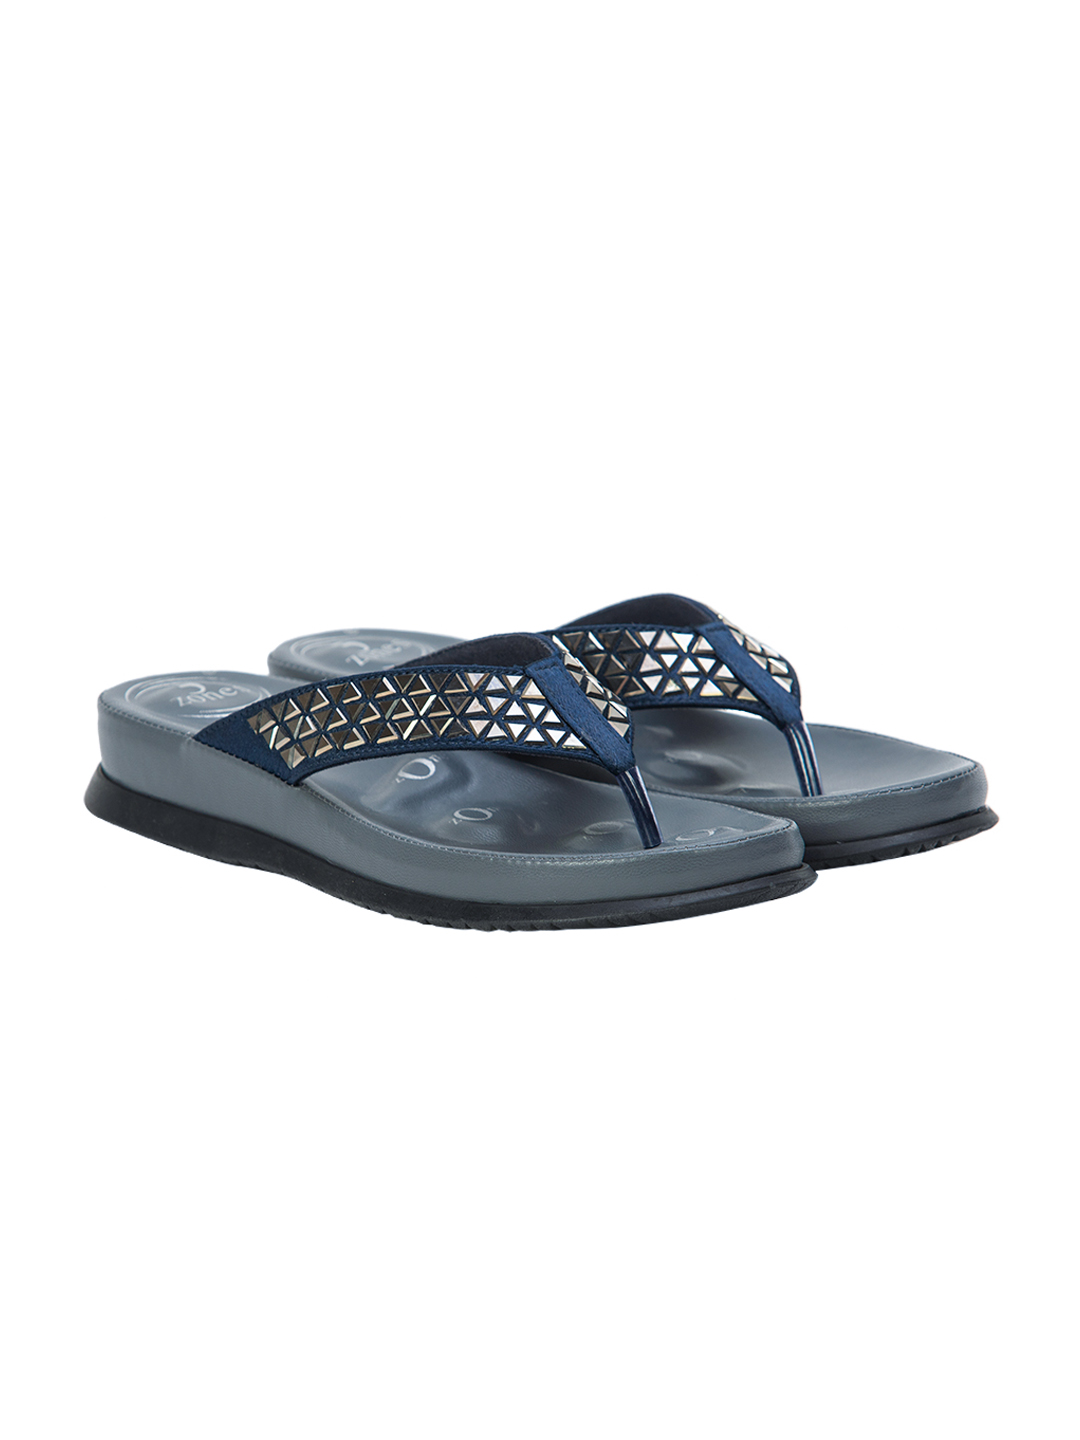 Buy Von Wellx Germany Comfort Beam Blue Slippers Online in Noida